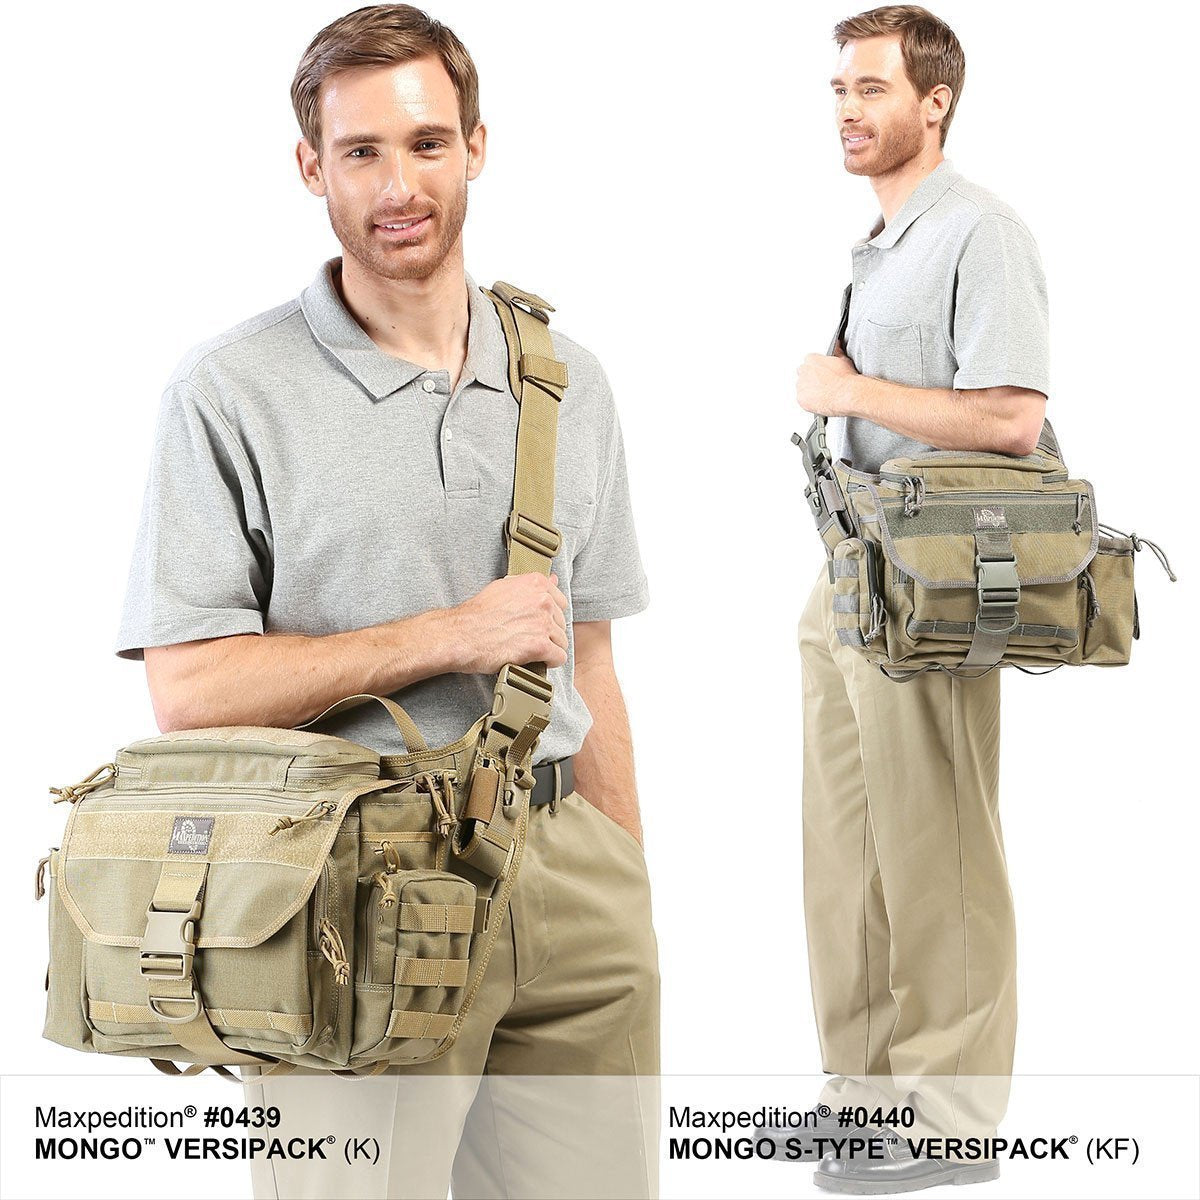 Maxpedition Mongo Versipack Sling Packs Maxpedition Tactical Gear Supplier Tactical Distributors Australia